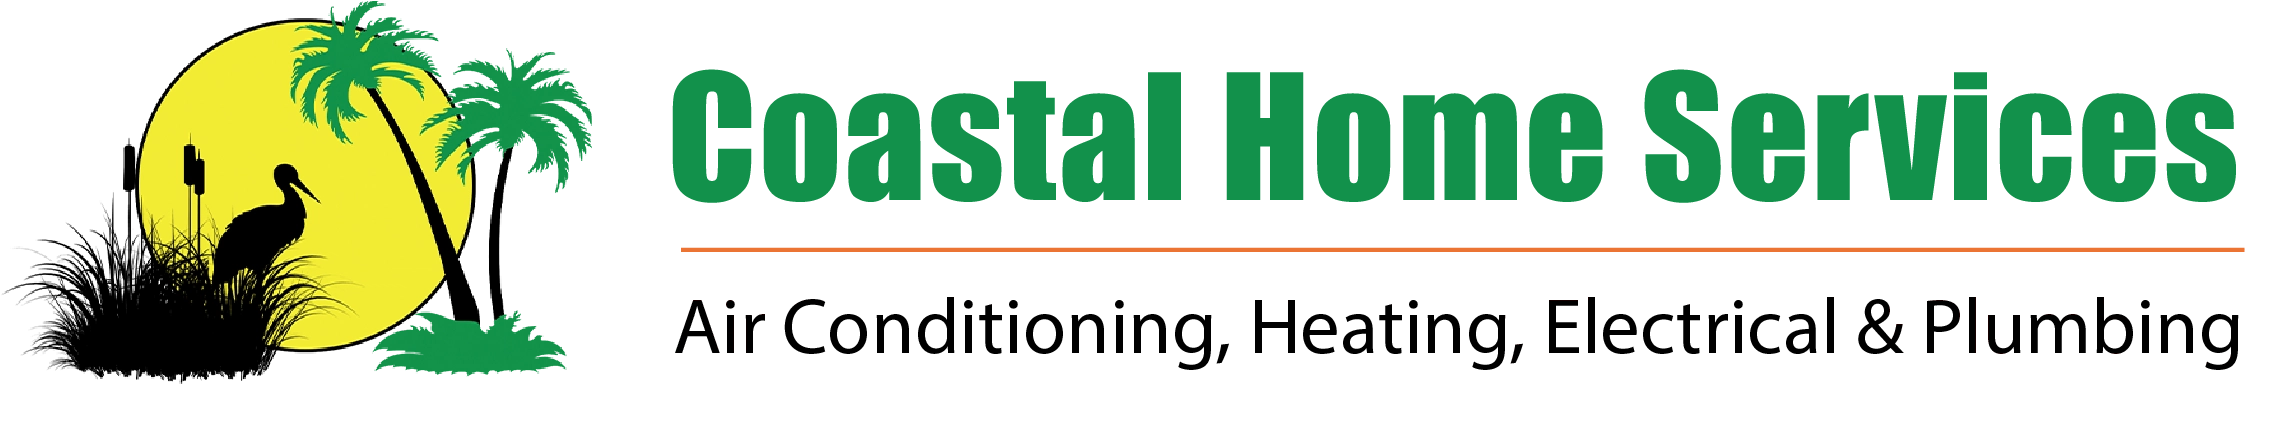 Coastal Homes Services, Inc. Logo